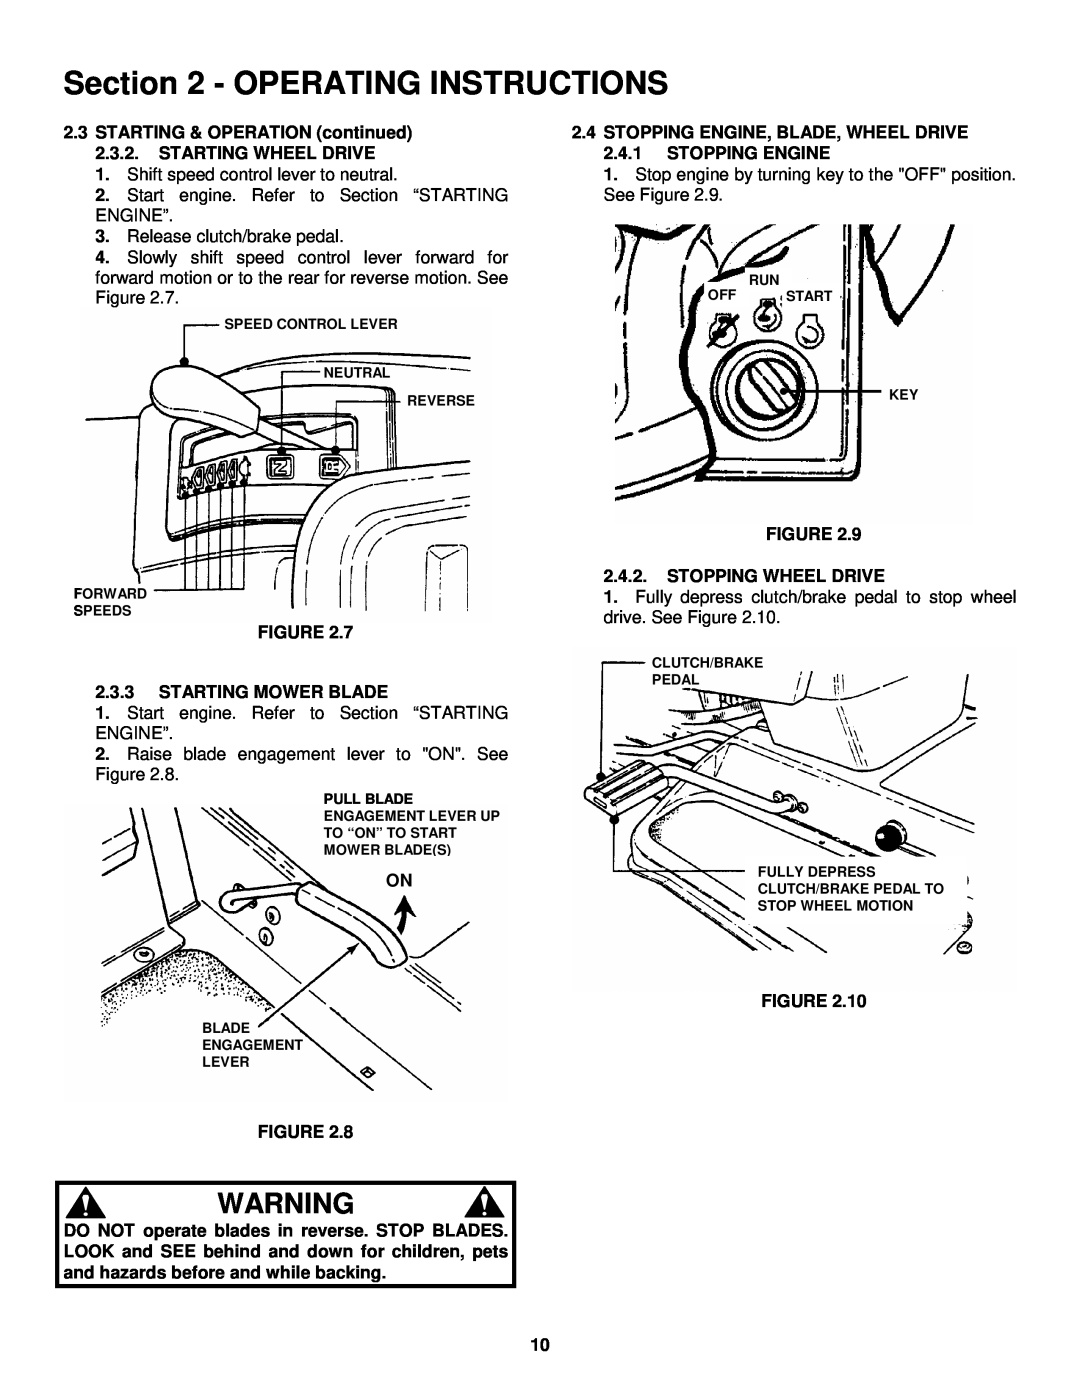 Snapper ELT145H33FBV important safety instructions Operating Instructions, 3.3STARTING MOWER BLADE 